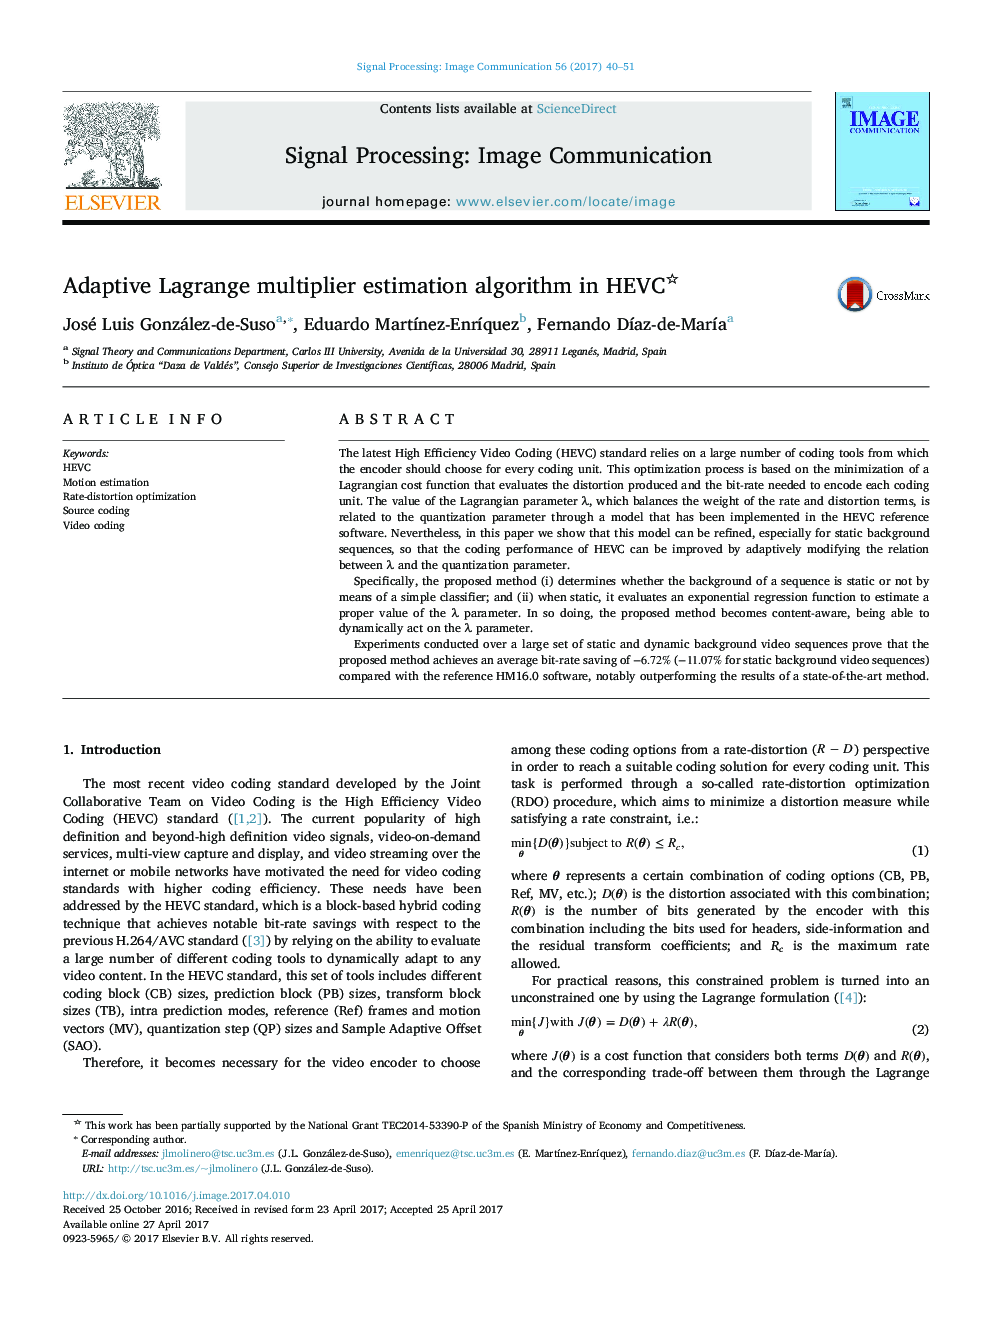 Adaptive Lagrange multiplier estimation algorithm in HEVC